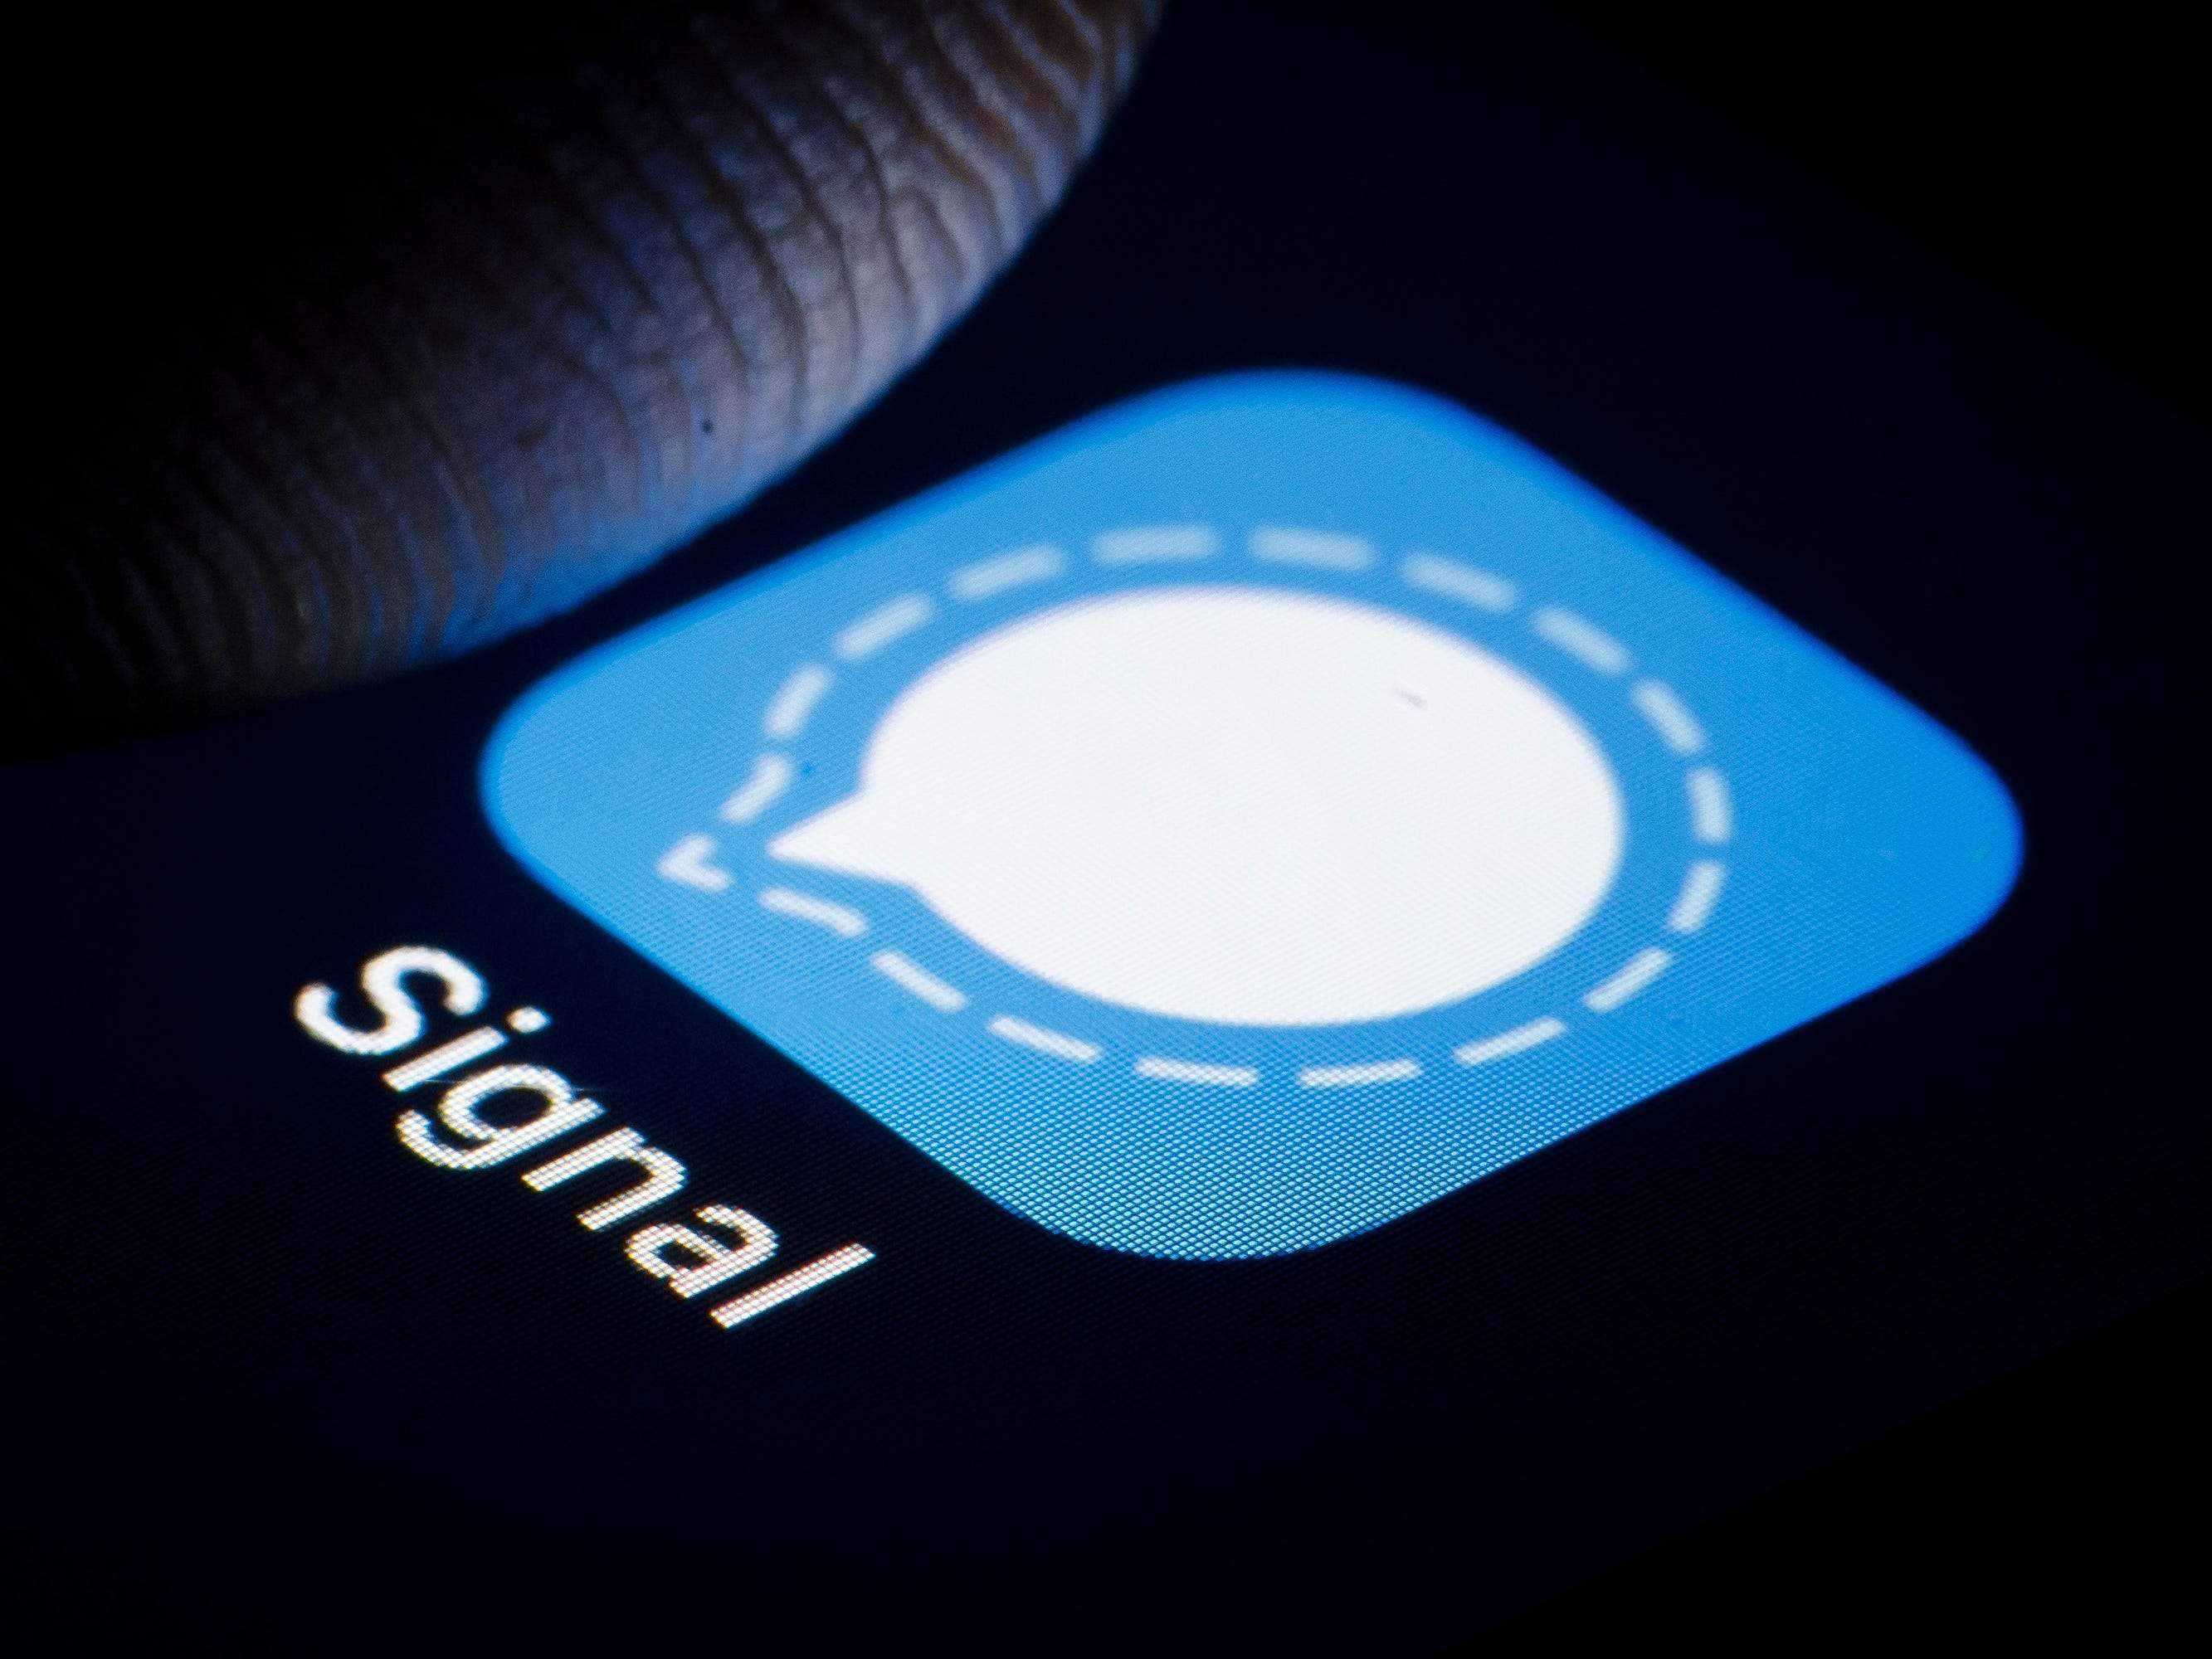 signal messaging app desktop